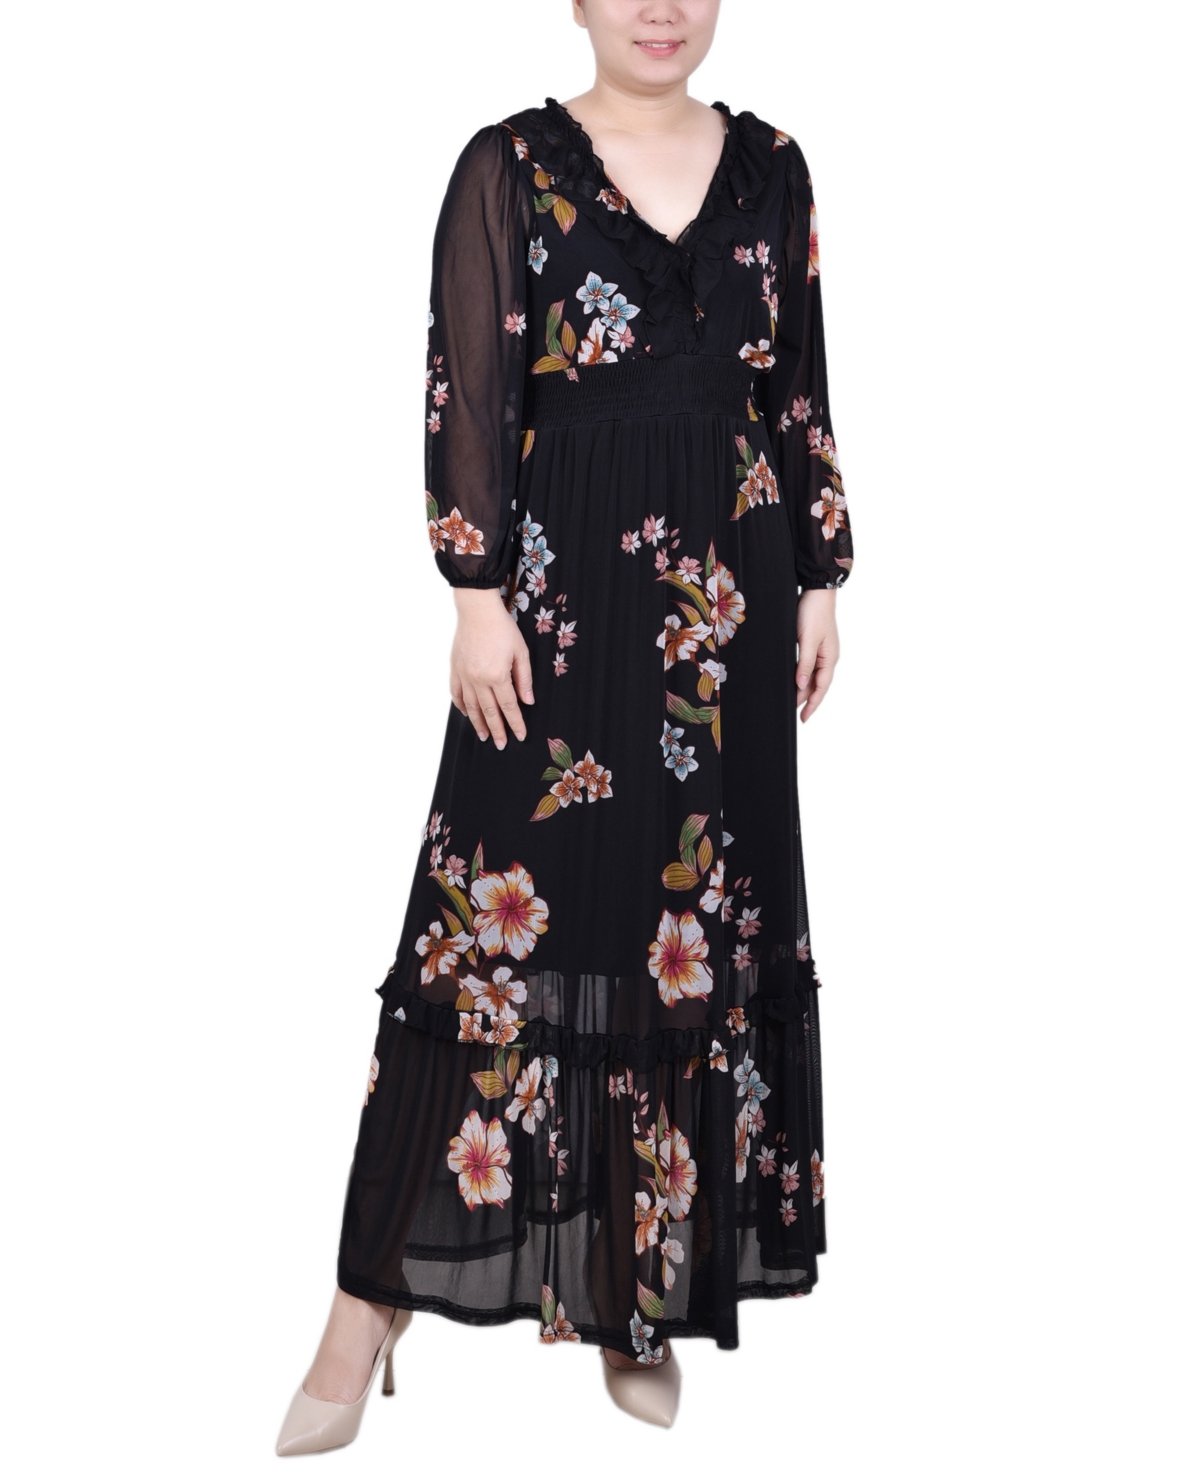 Modest, Mature, Mrs. Vintage Dresses – 20s, 30s, 40s, 50s, 60s Ny Collection Womens Long Sleeve Mesh Maxi Dress - Black Floral $60.00 AT vintagedancer.com